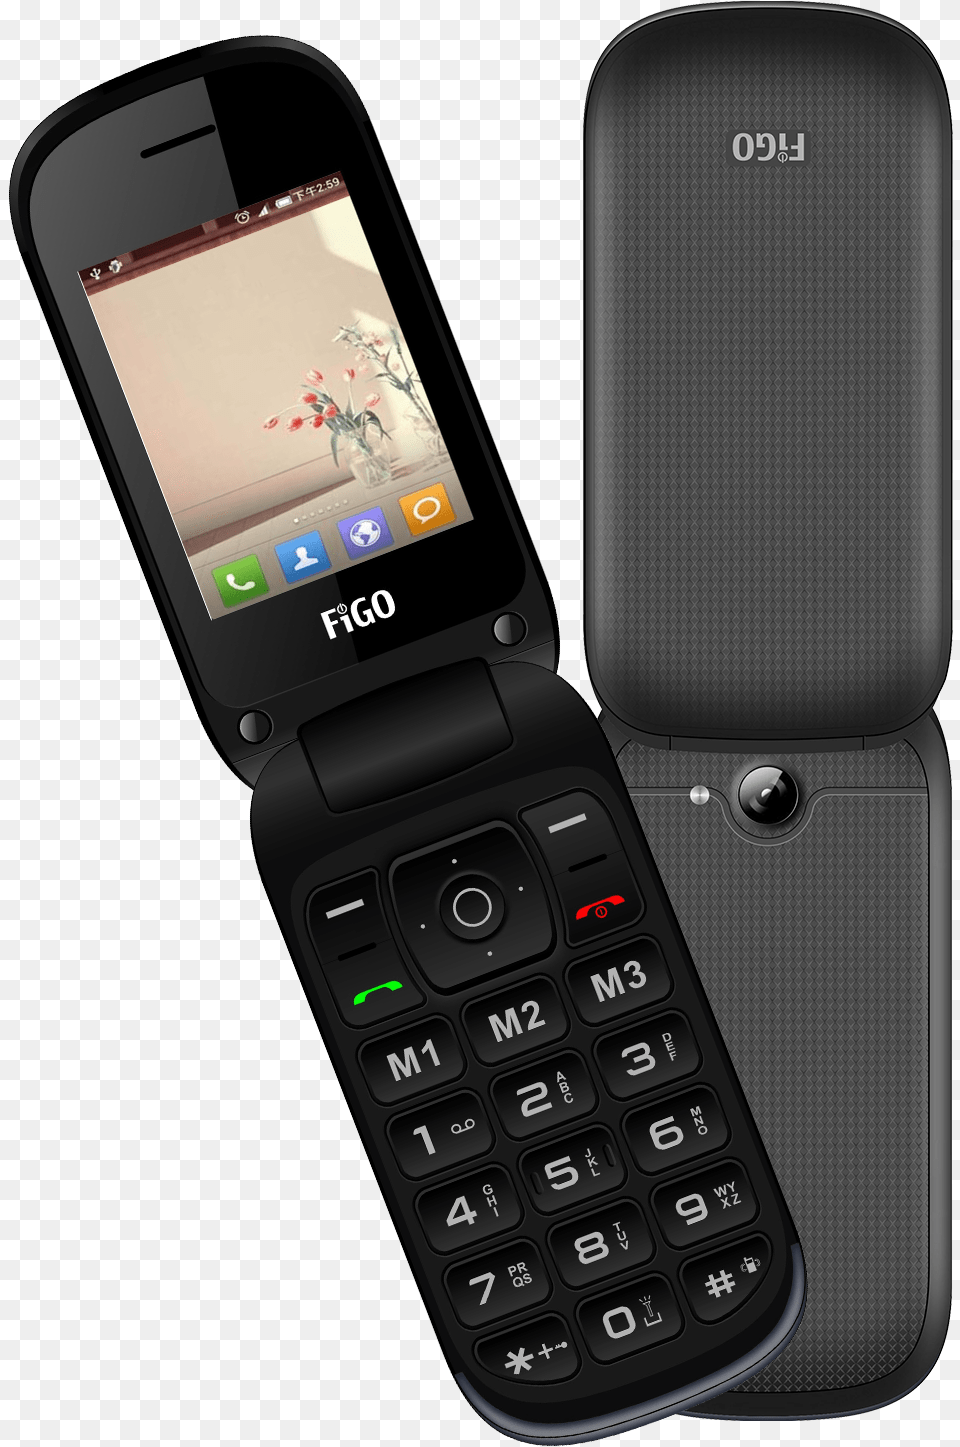 Figo Fury Flip Phone Hd Download Figo Phone, Electronics, Mobile Phone Png Image